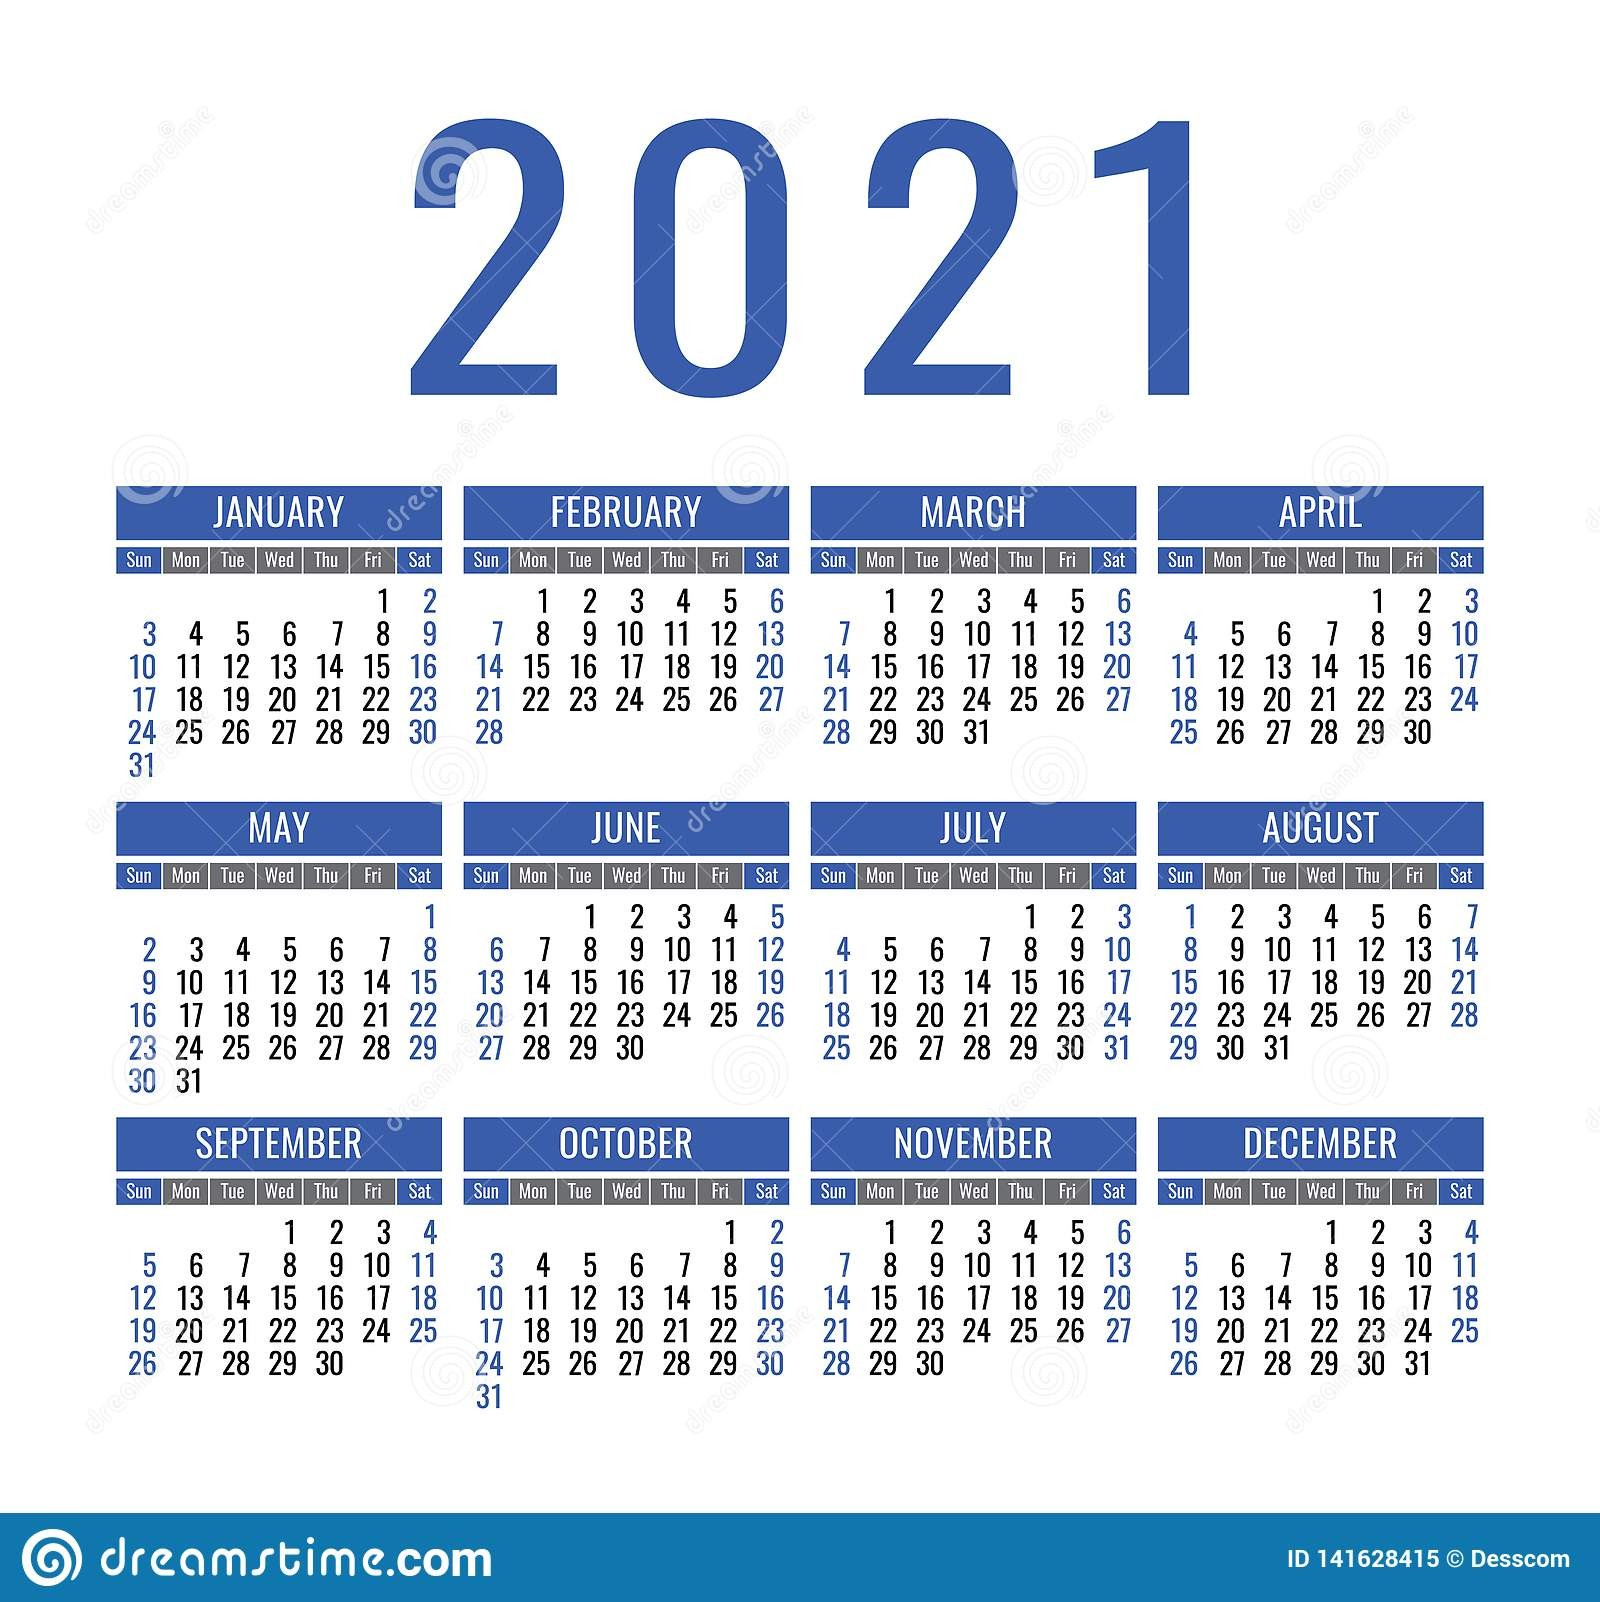 Broadcast Calendar 2021 | Calendar For Planning pertaining to Quadax 2021 Julian Calendar